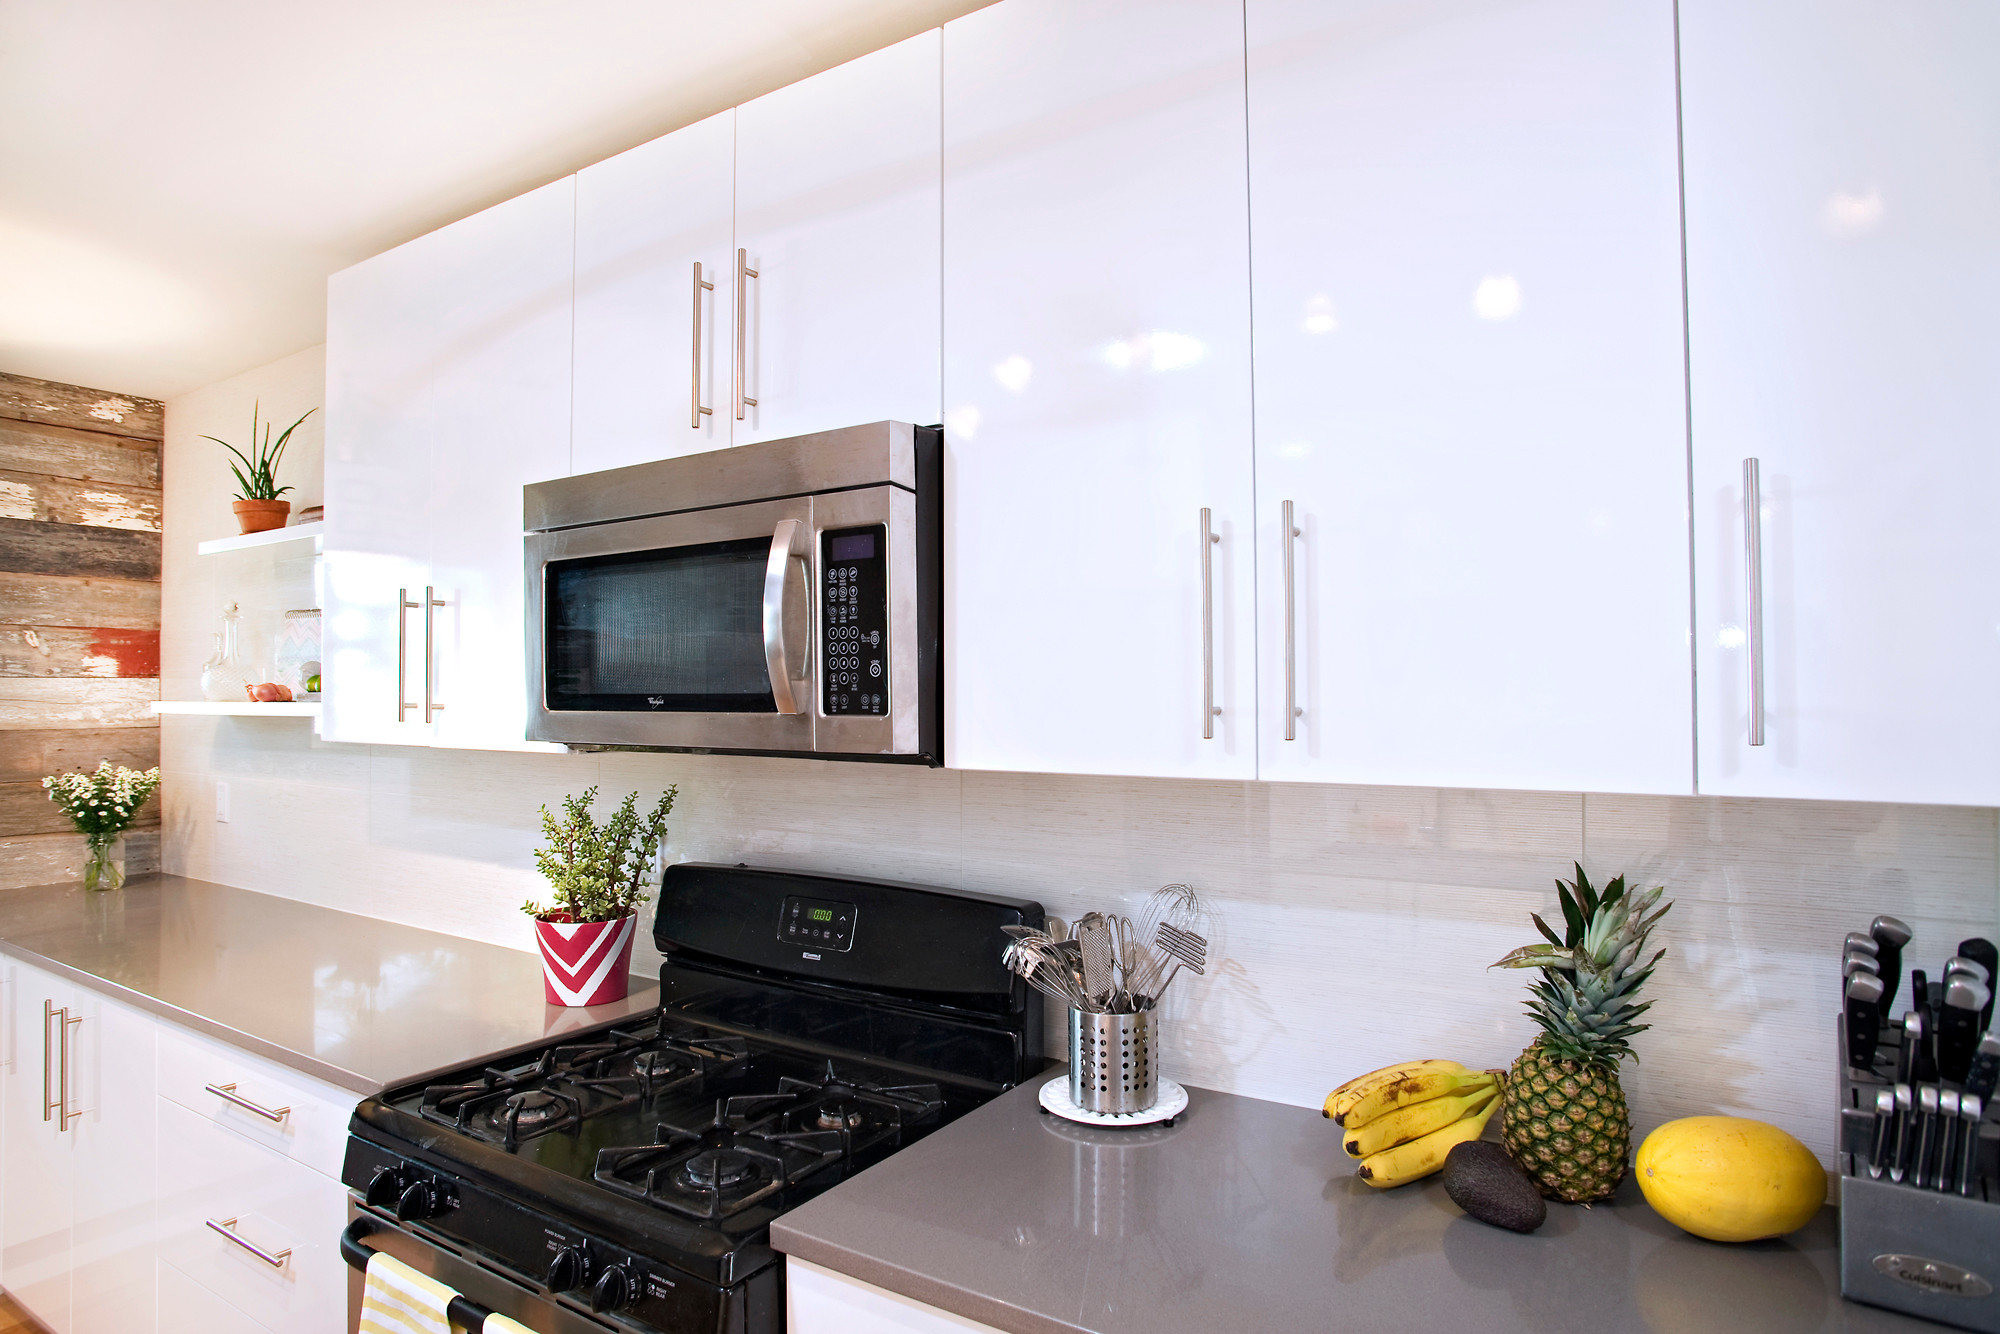 White Gloss Kitchen Cabinets - Photos & Ideas | Houzz